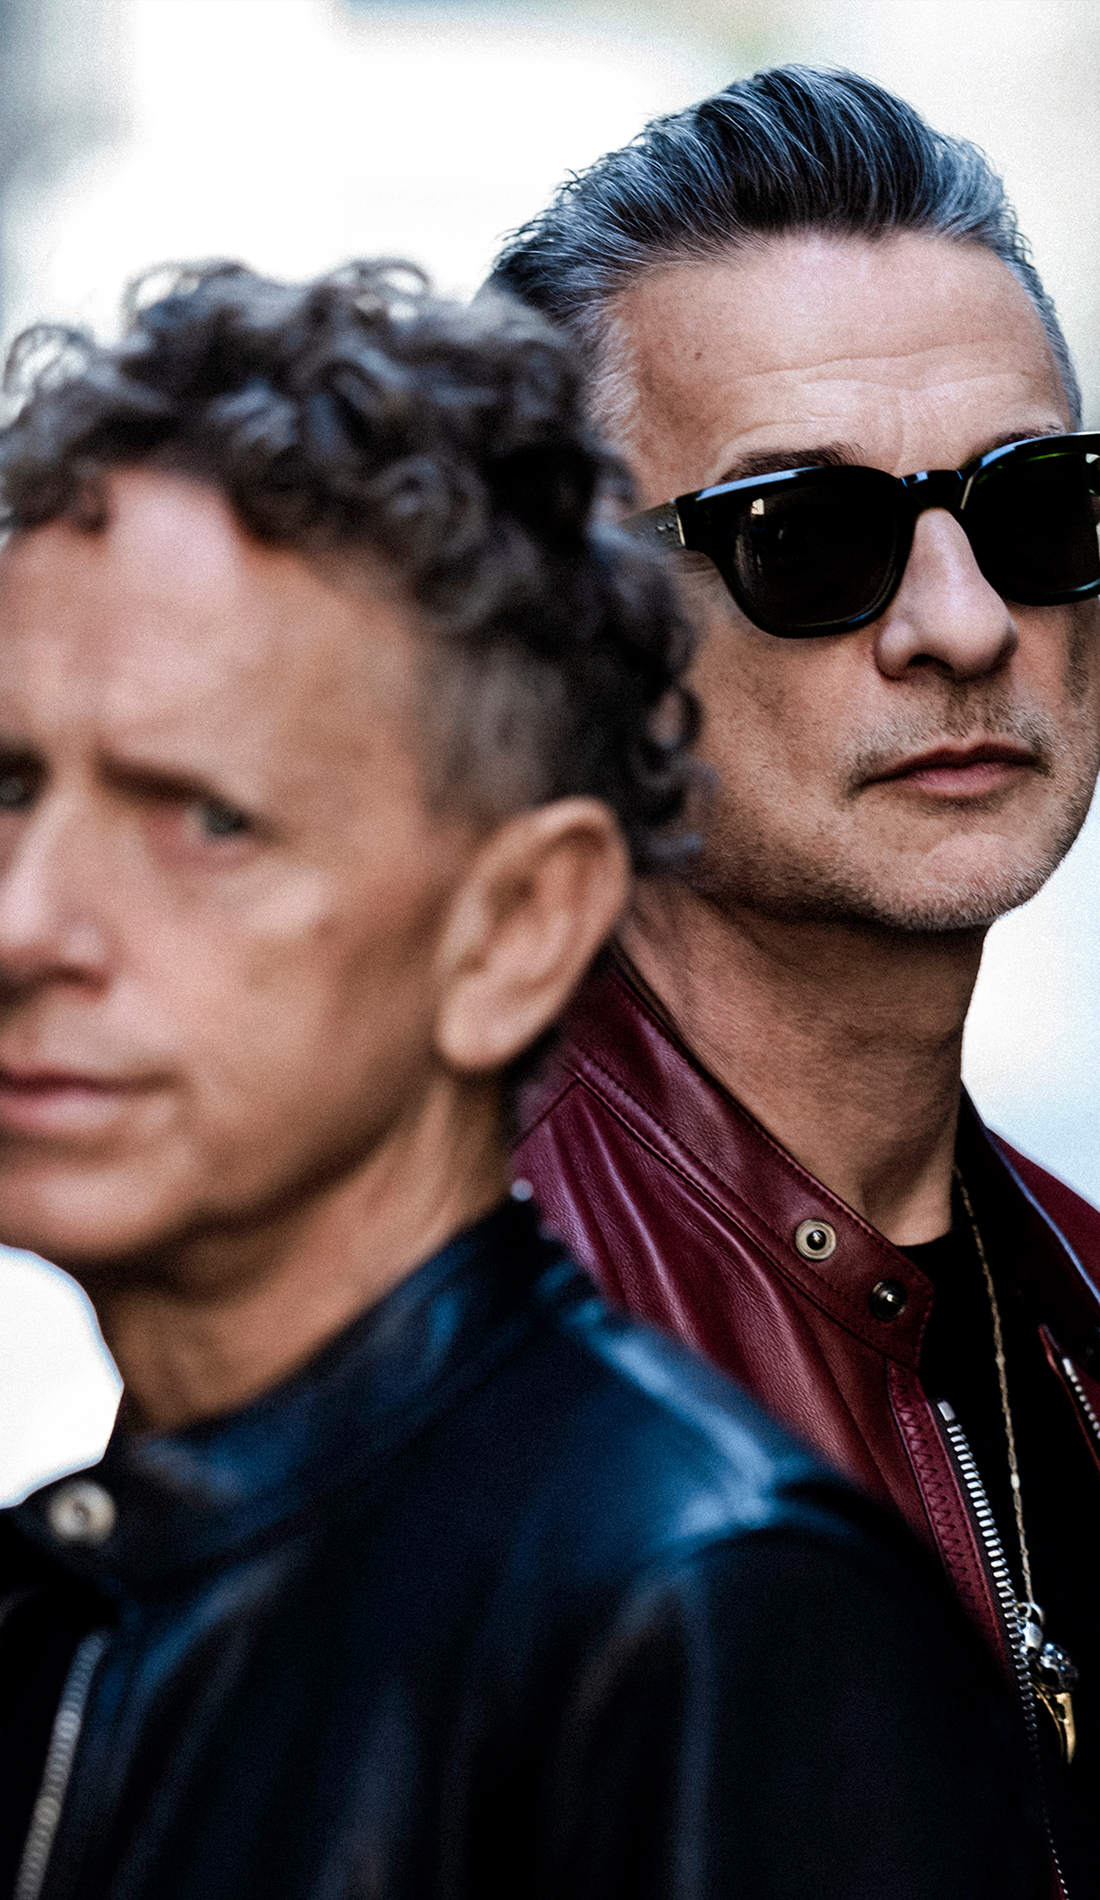 A Depeche Mode live event